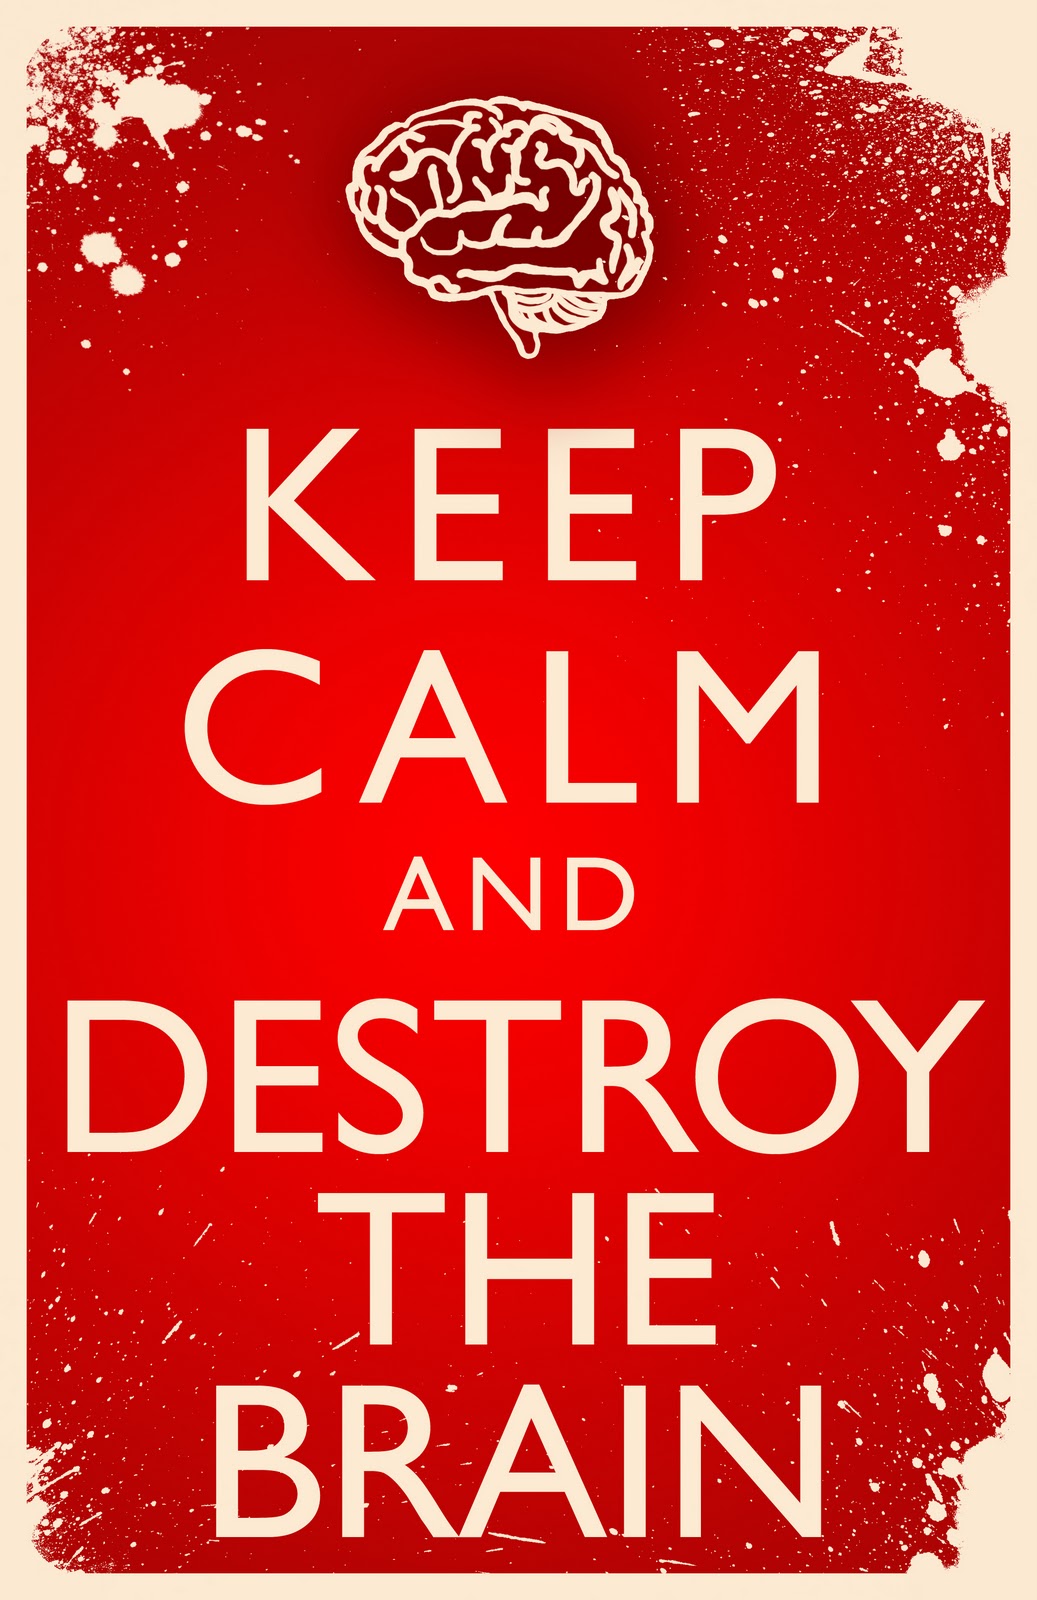 Keep Calm and Destroy The Brain HD Wallpaper 440 1037x1600